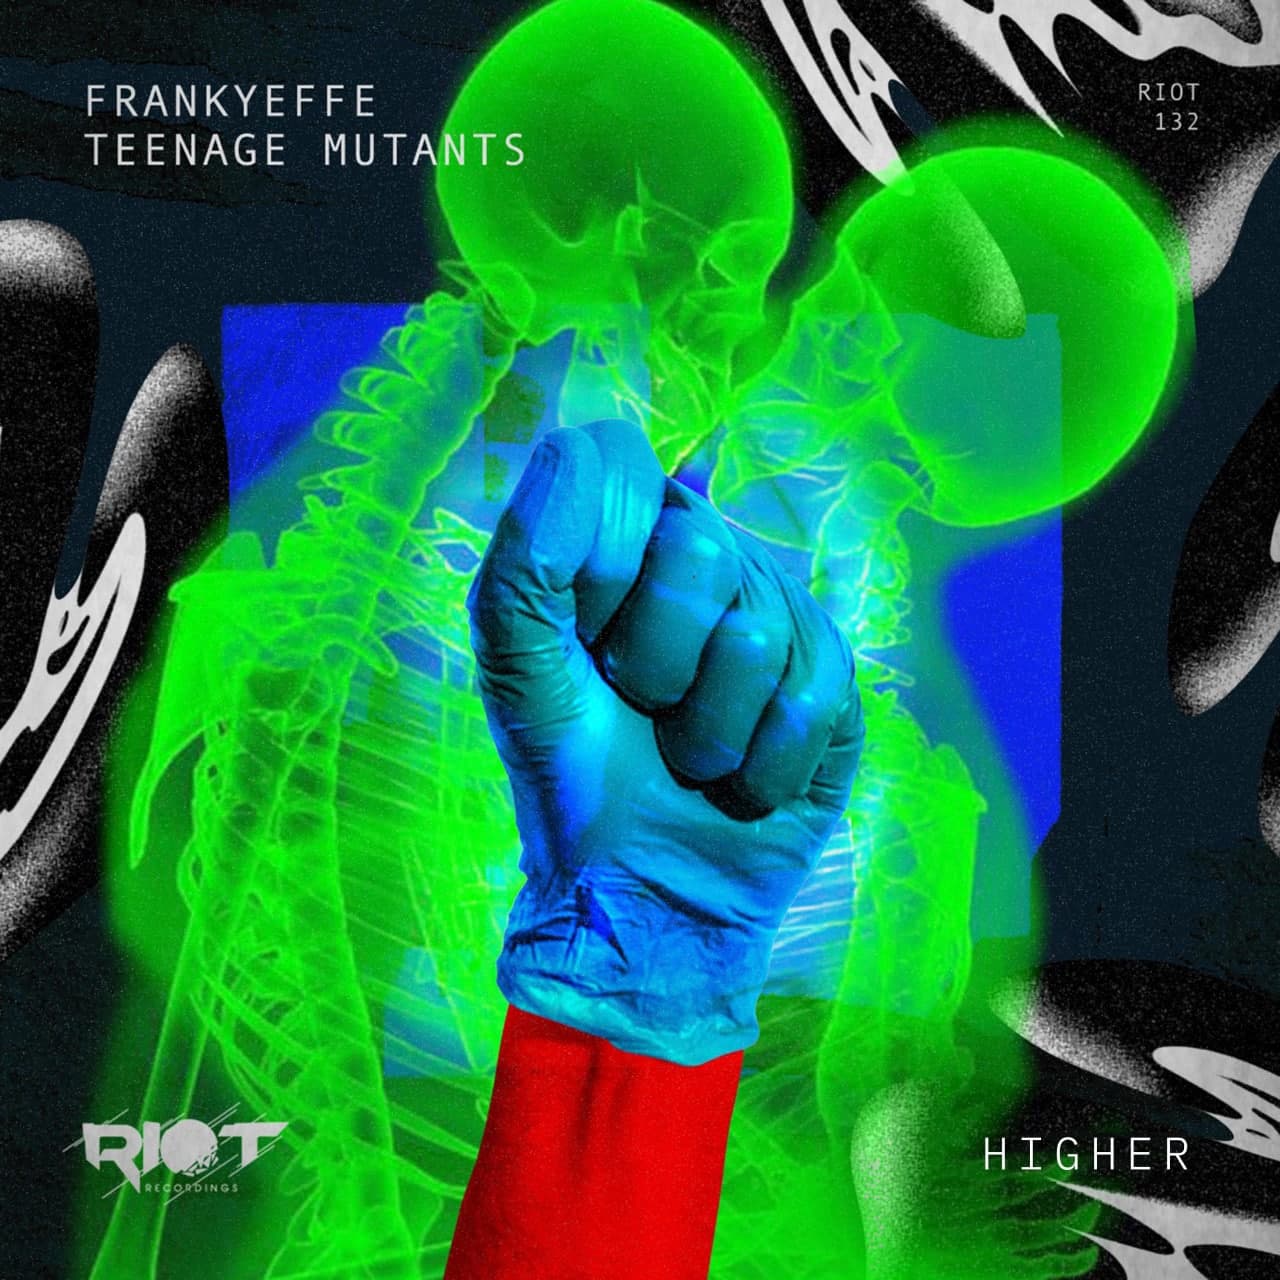 Frankyeffe & Teenage Mutants - Higher (Original Mix)